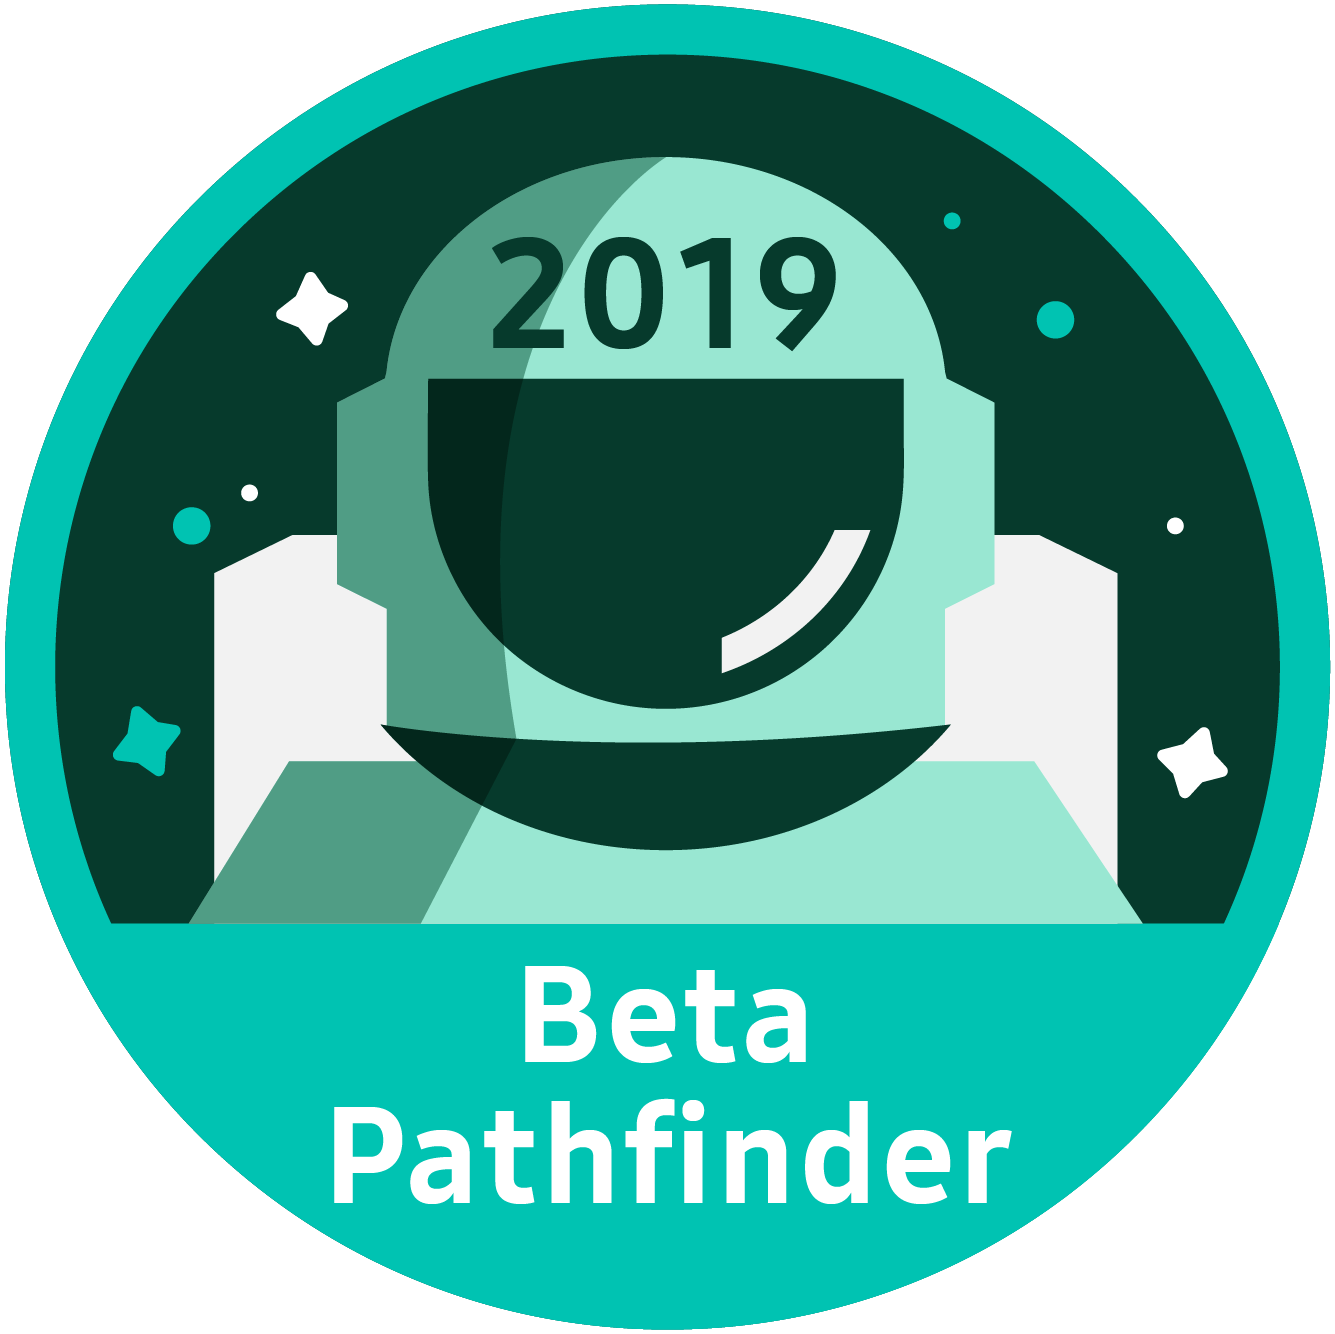 Beta Pathfinder 2019